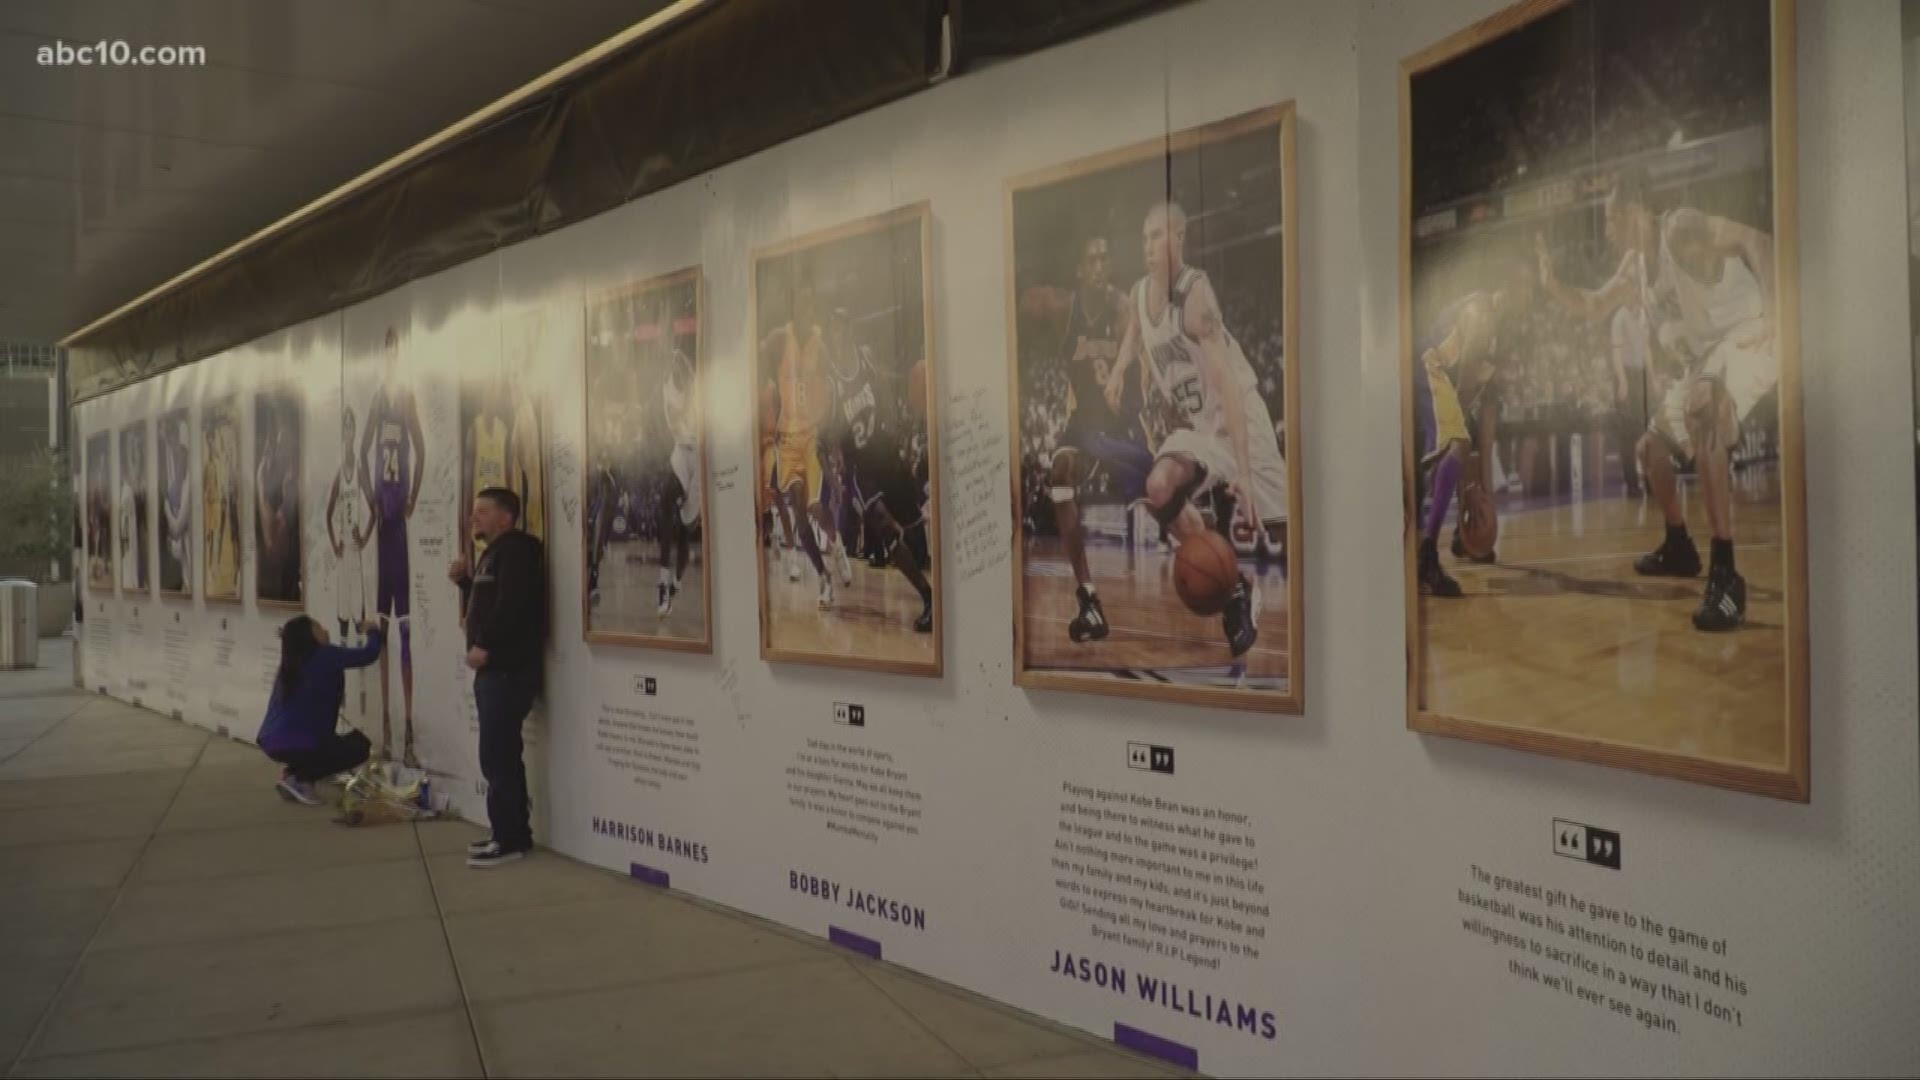 NBA Buzz - The LA Kings honored Kobe Bryant tonight with